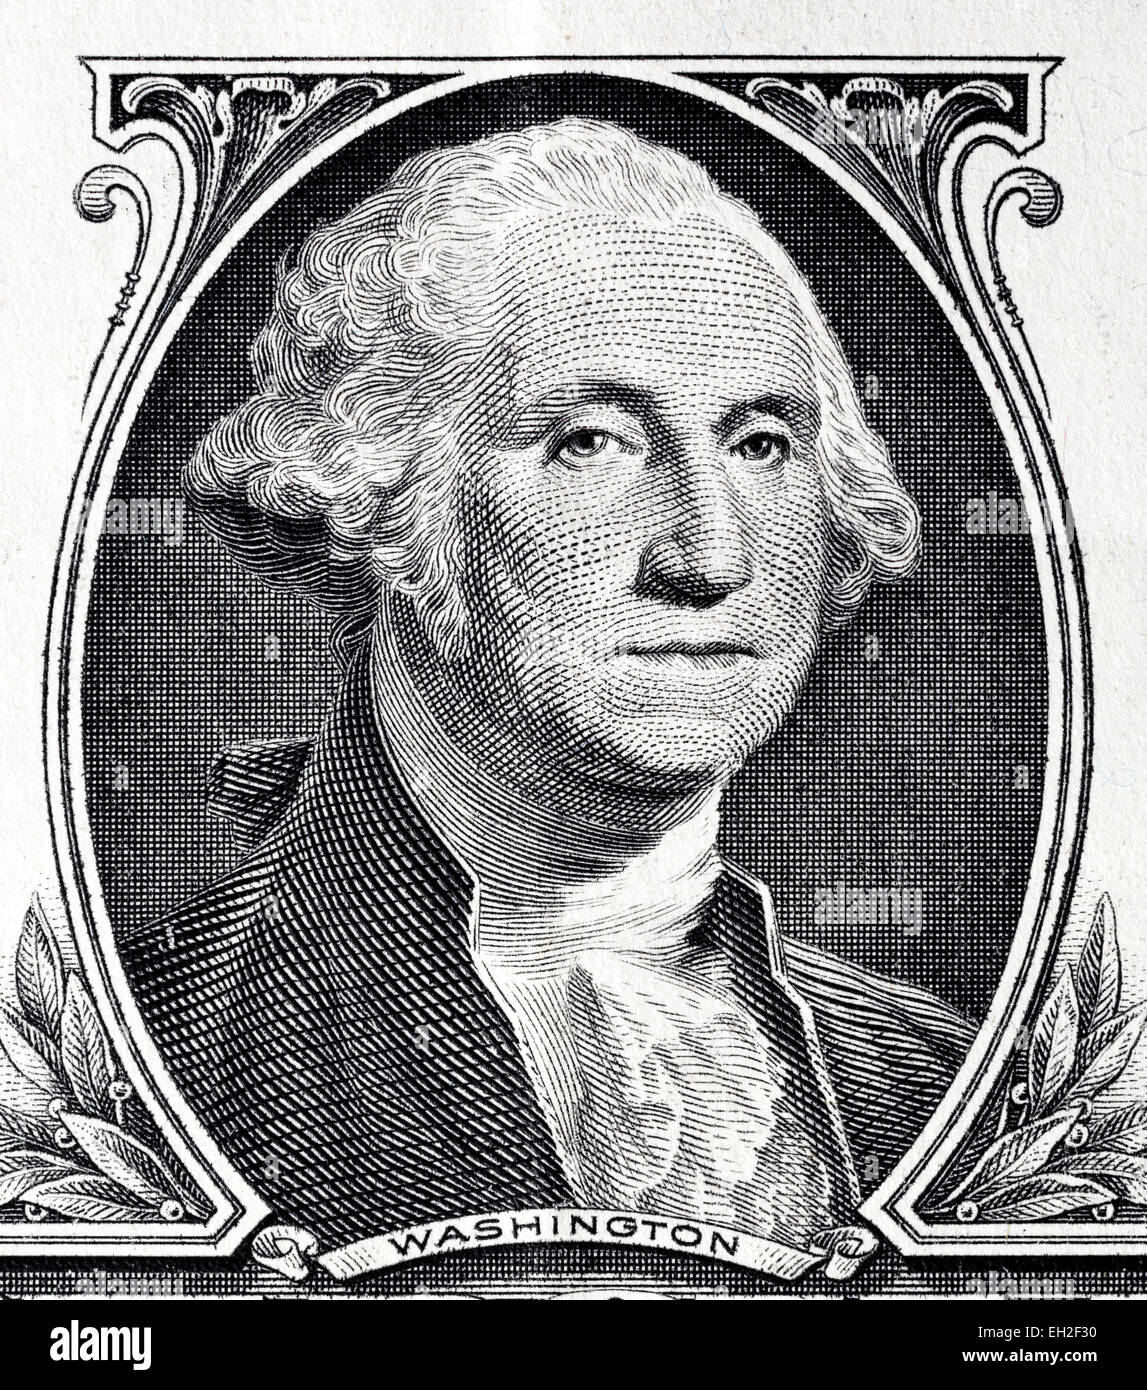 President George Washington from 1 dollar banknote, USA, 2009 Stock Photo